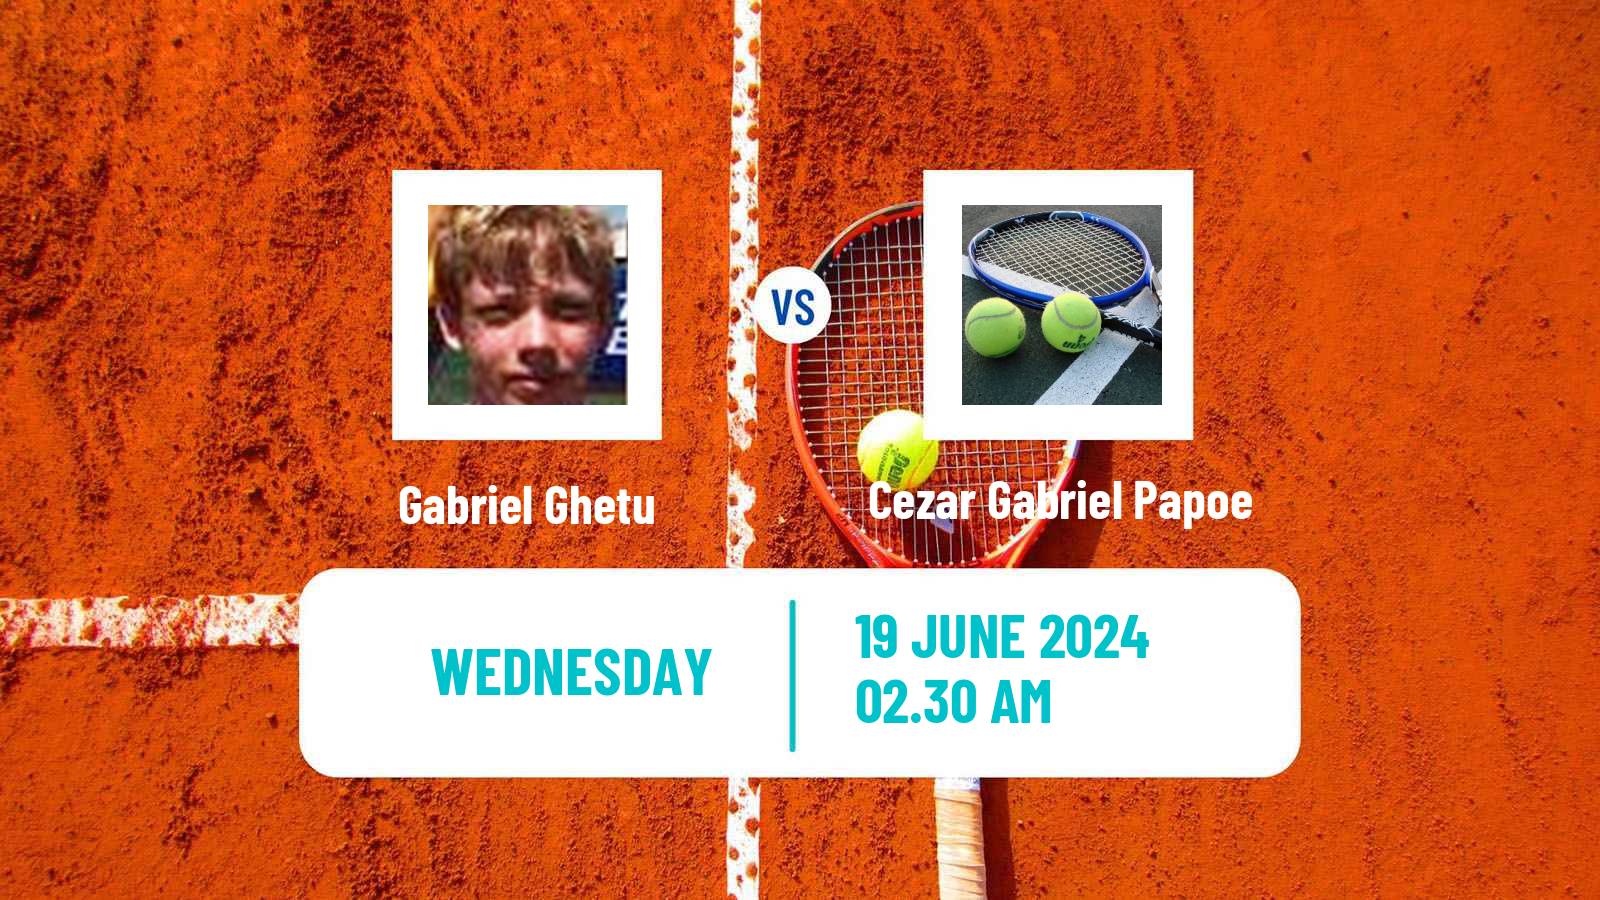 Tennis ITF M15 Cluj Napoca Men Gabriel Ghetu - Cezar Gabriel Papoe